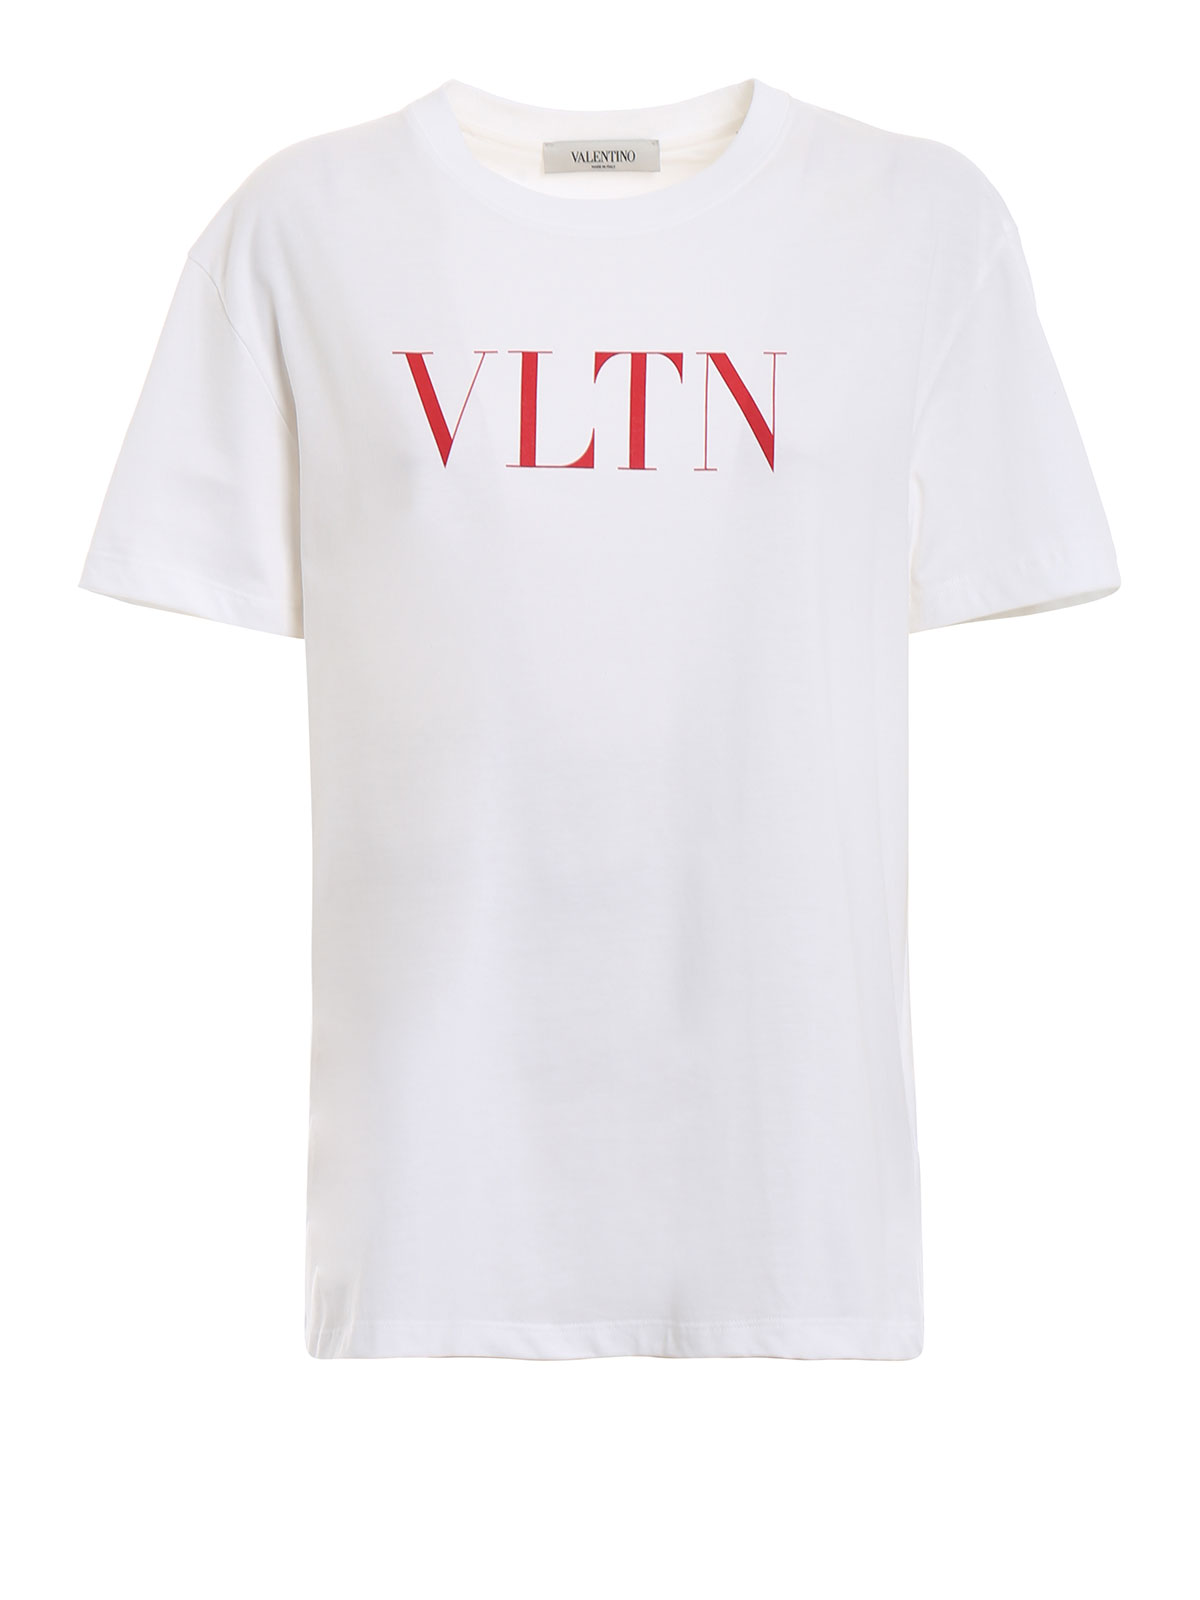 Tシャツ Valentino - Tシャツ - Vltn - RB3MG07D3V6A33 | iKRIX.com